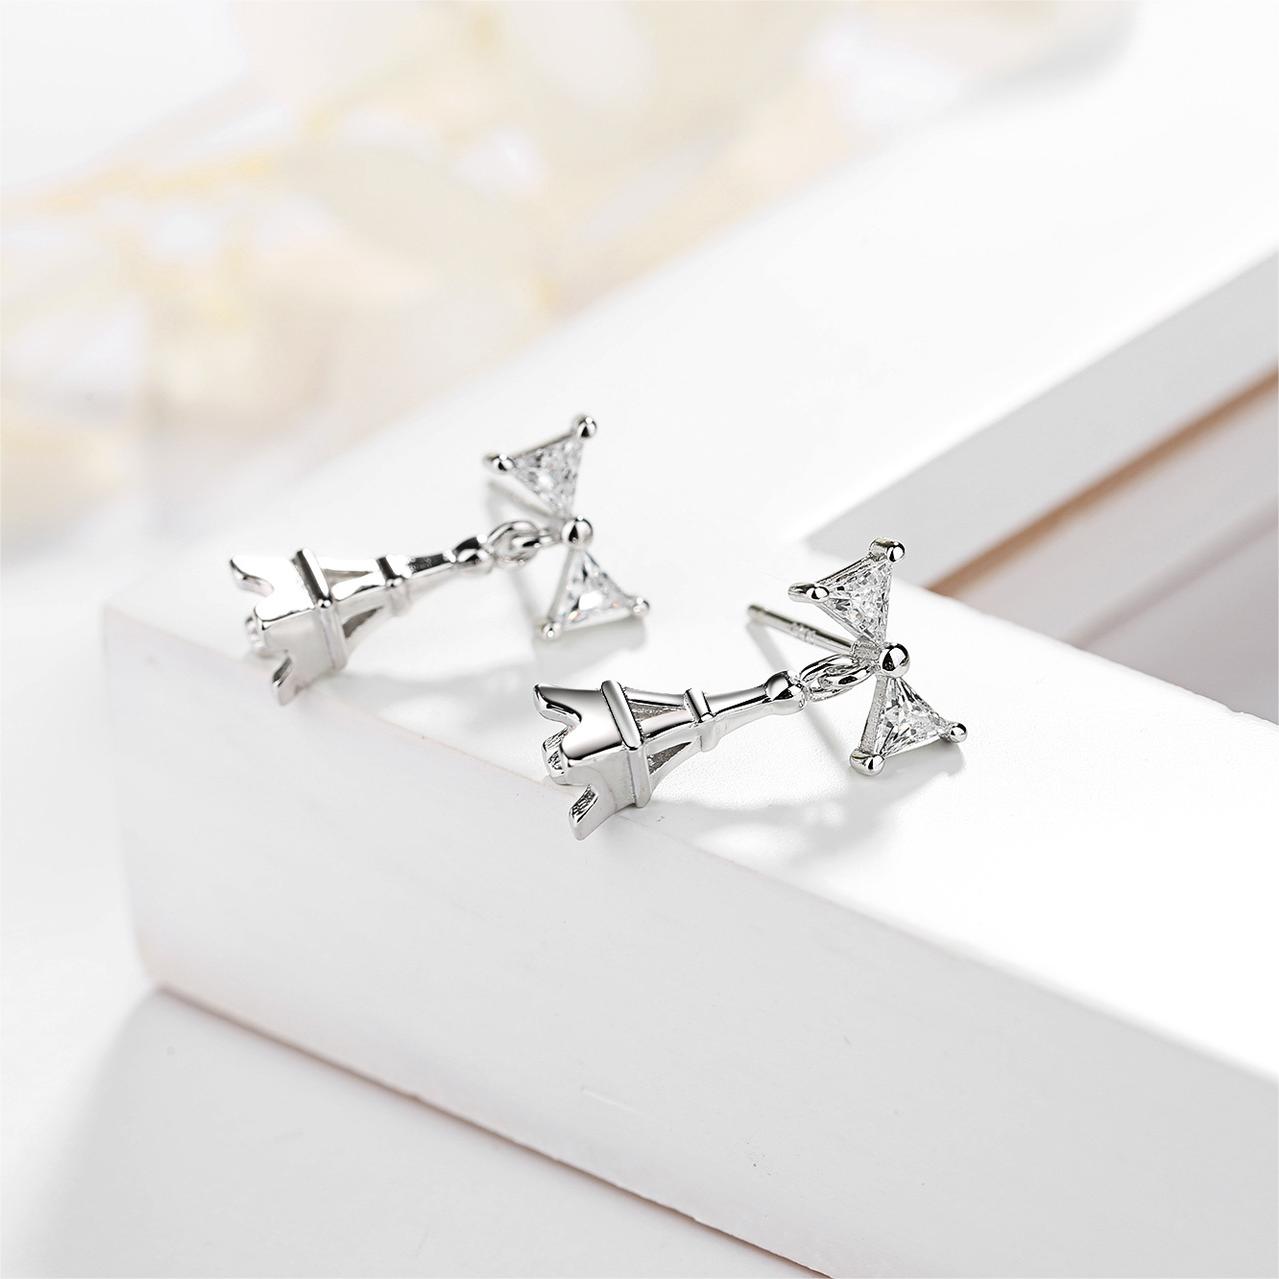 Crystal & Silver-Plated Eiffel Tower Drop Earrings